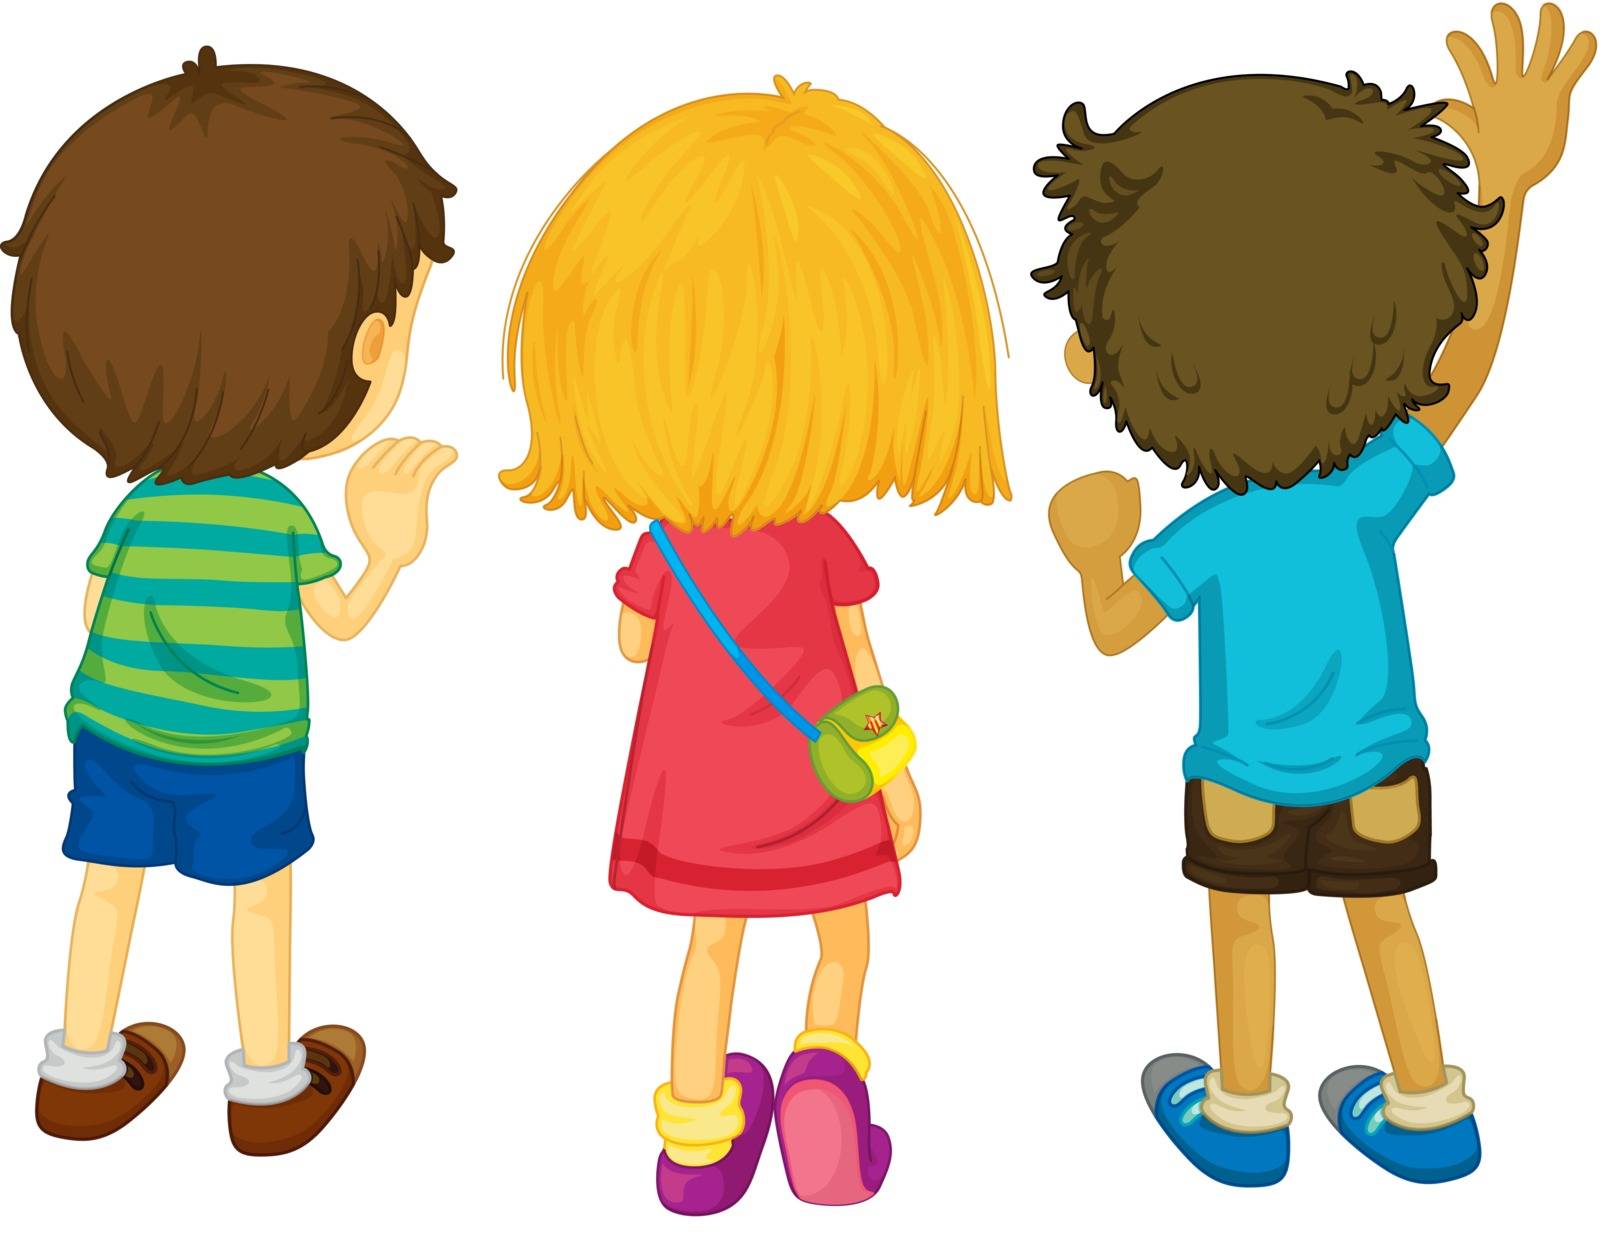 Illustration of 3 kids with backs facing